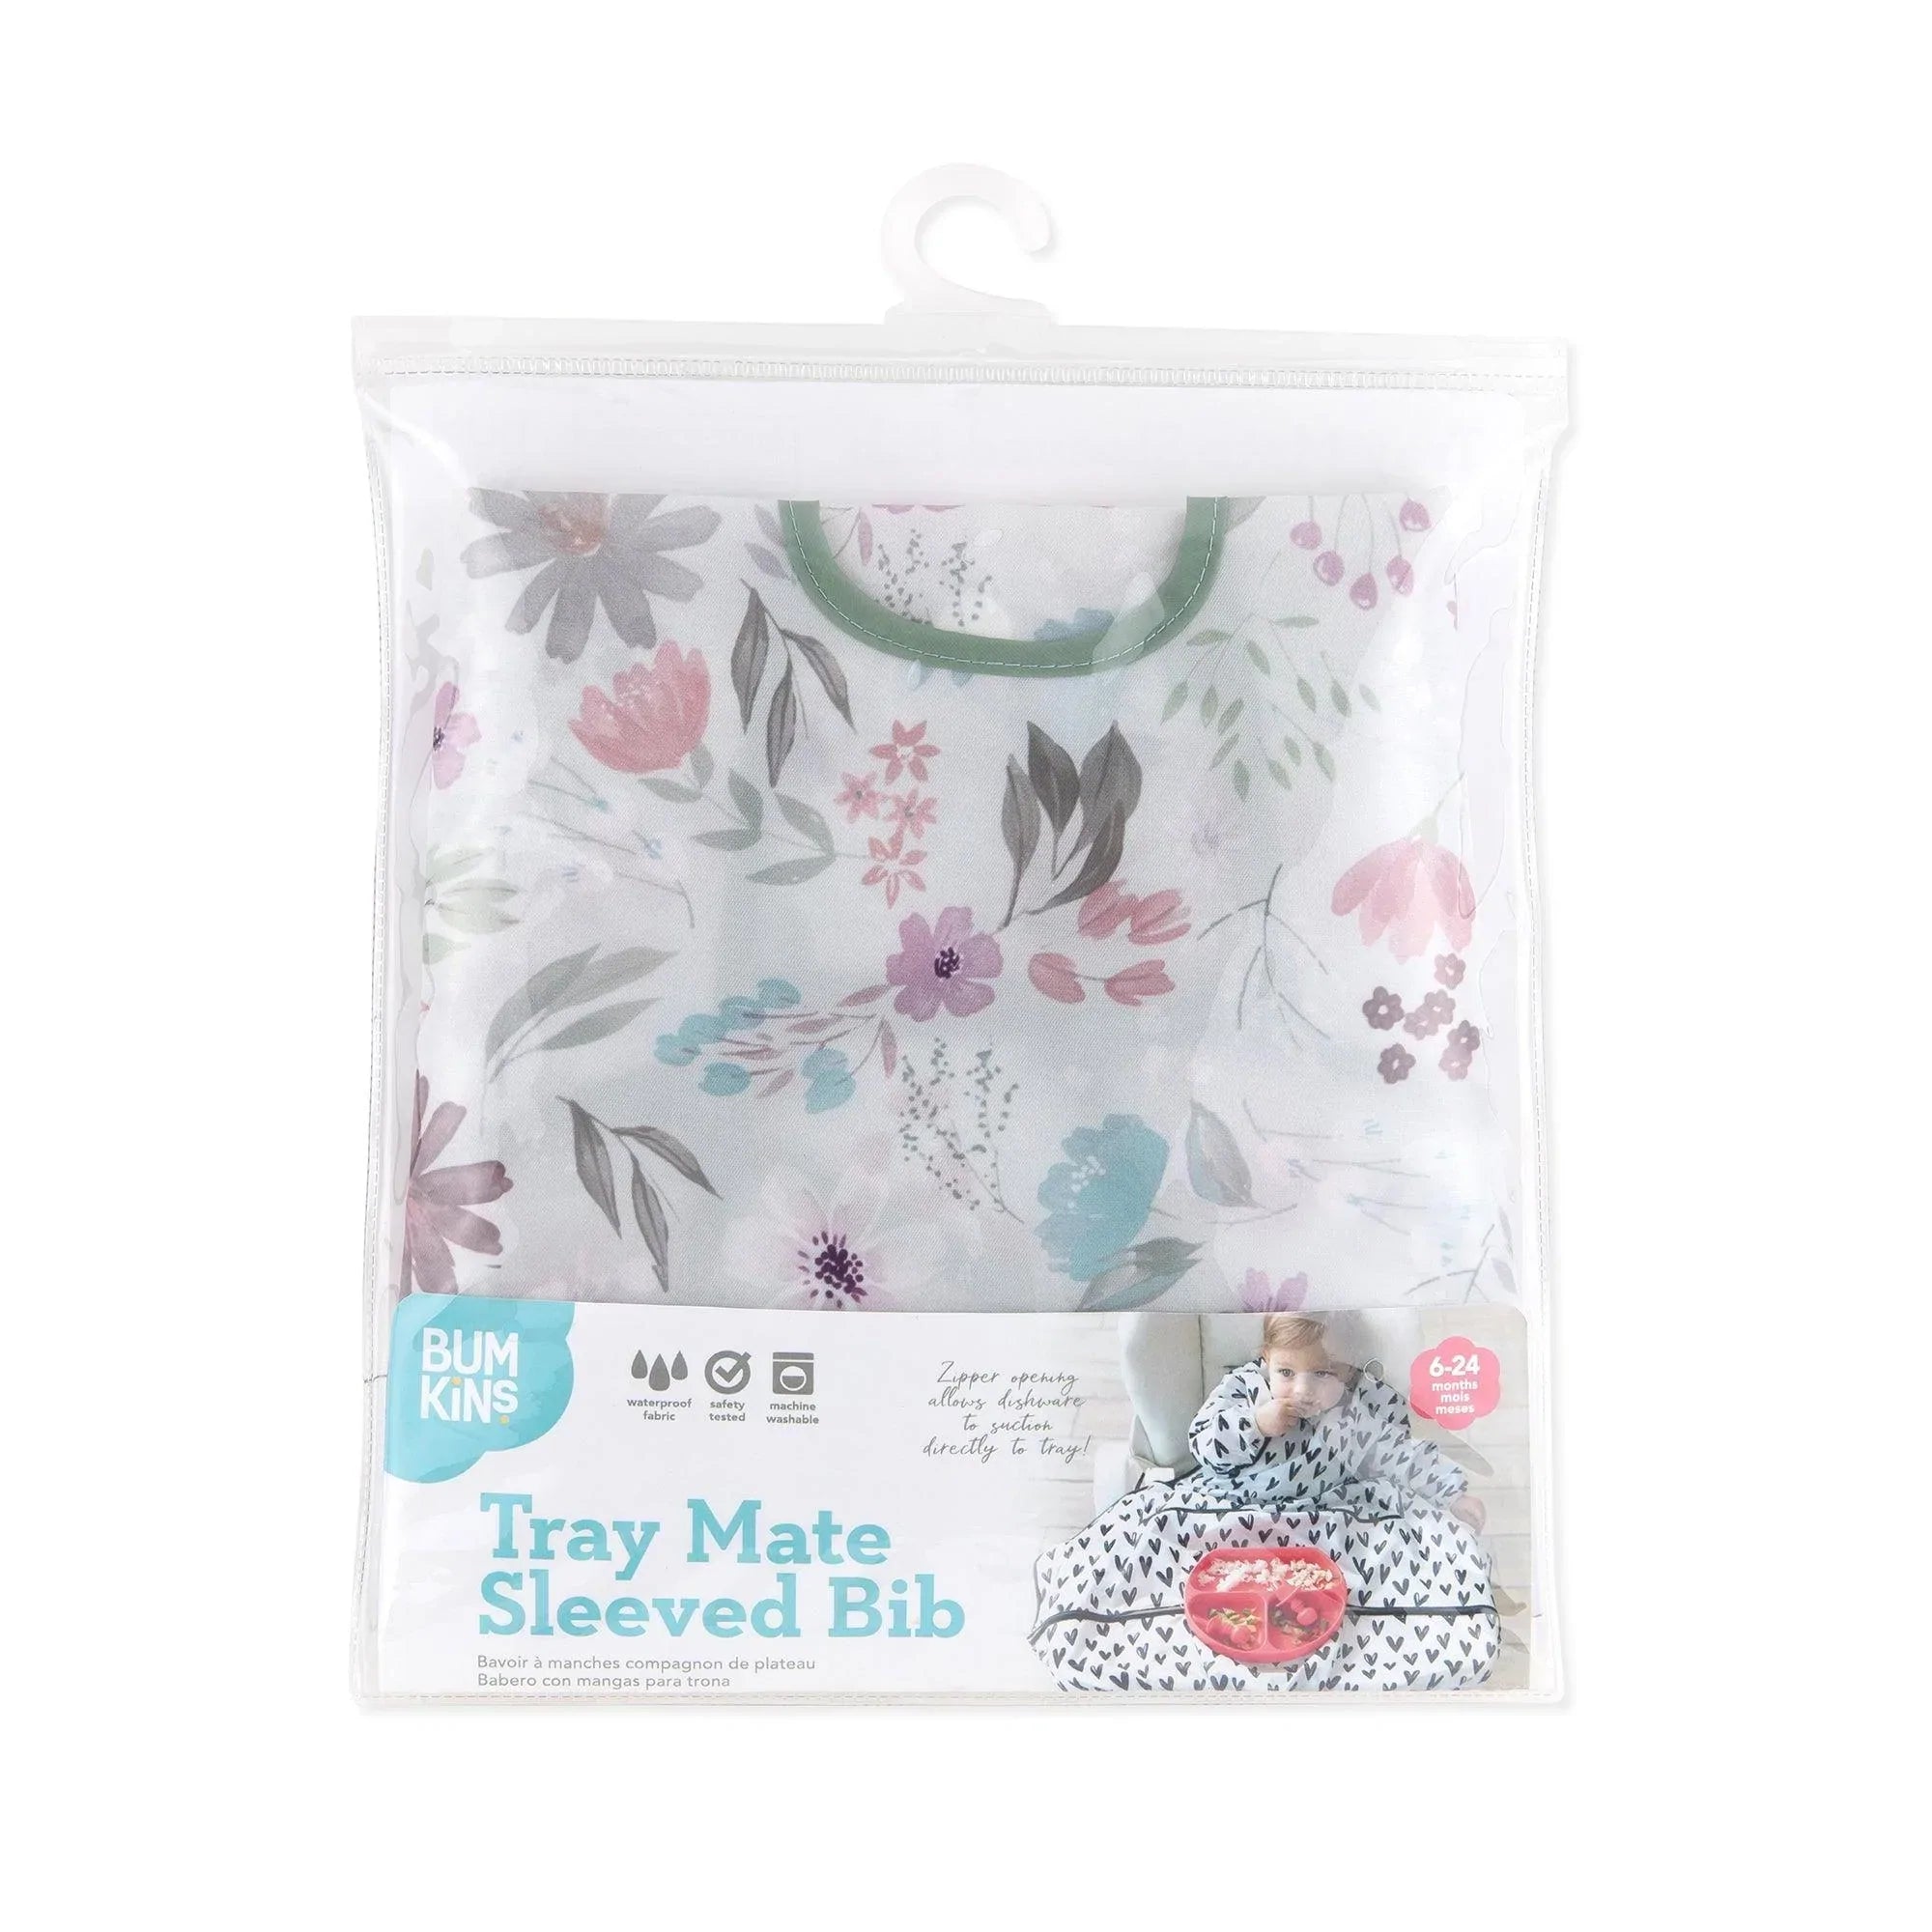 Tray Mate Sleeved Bib: Floral - Bumkins